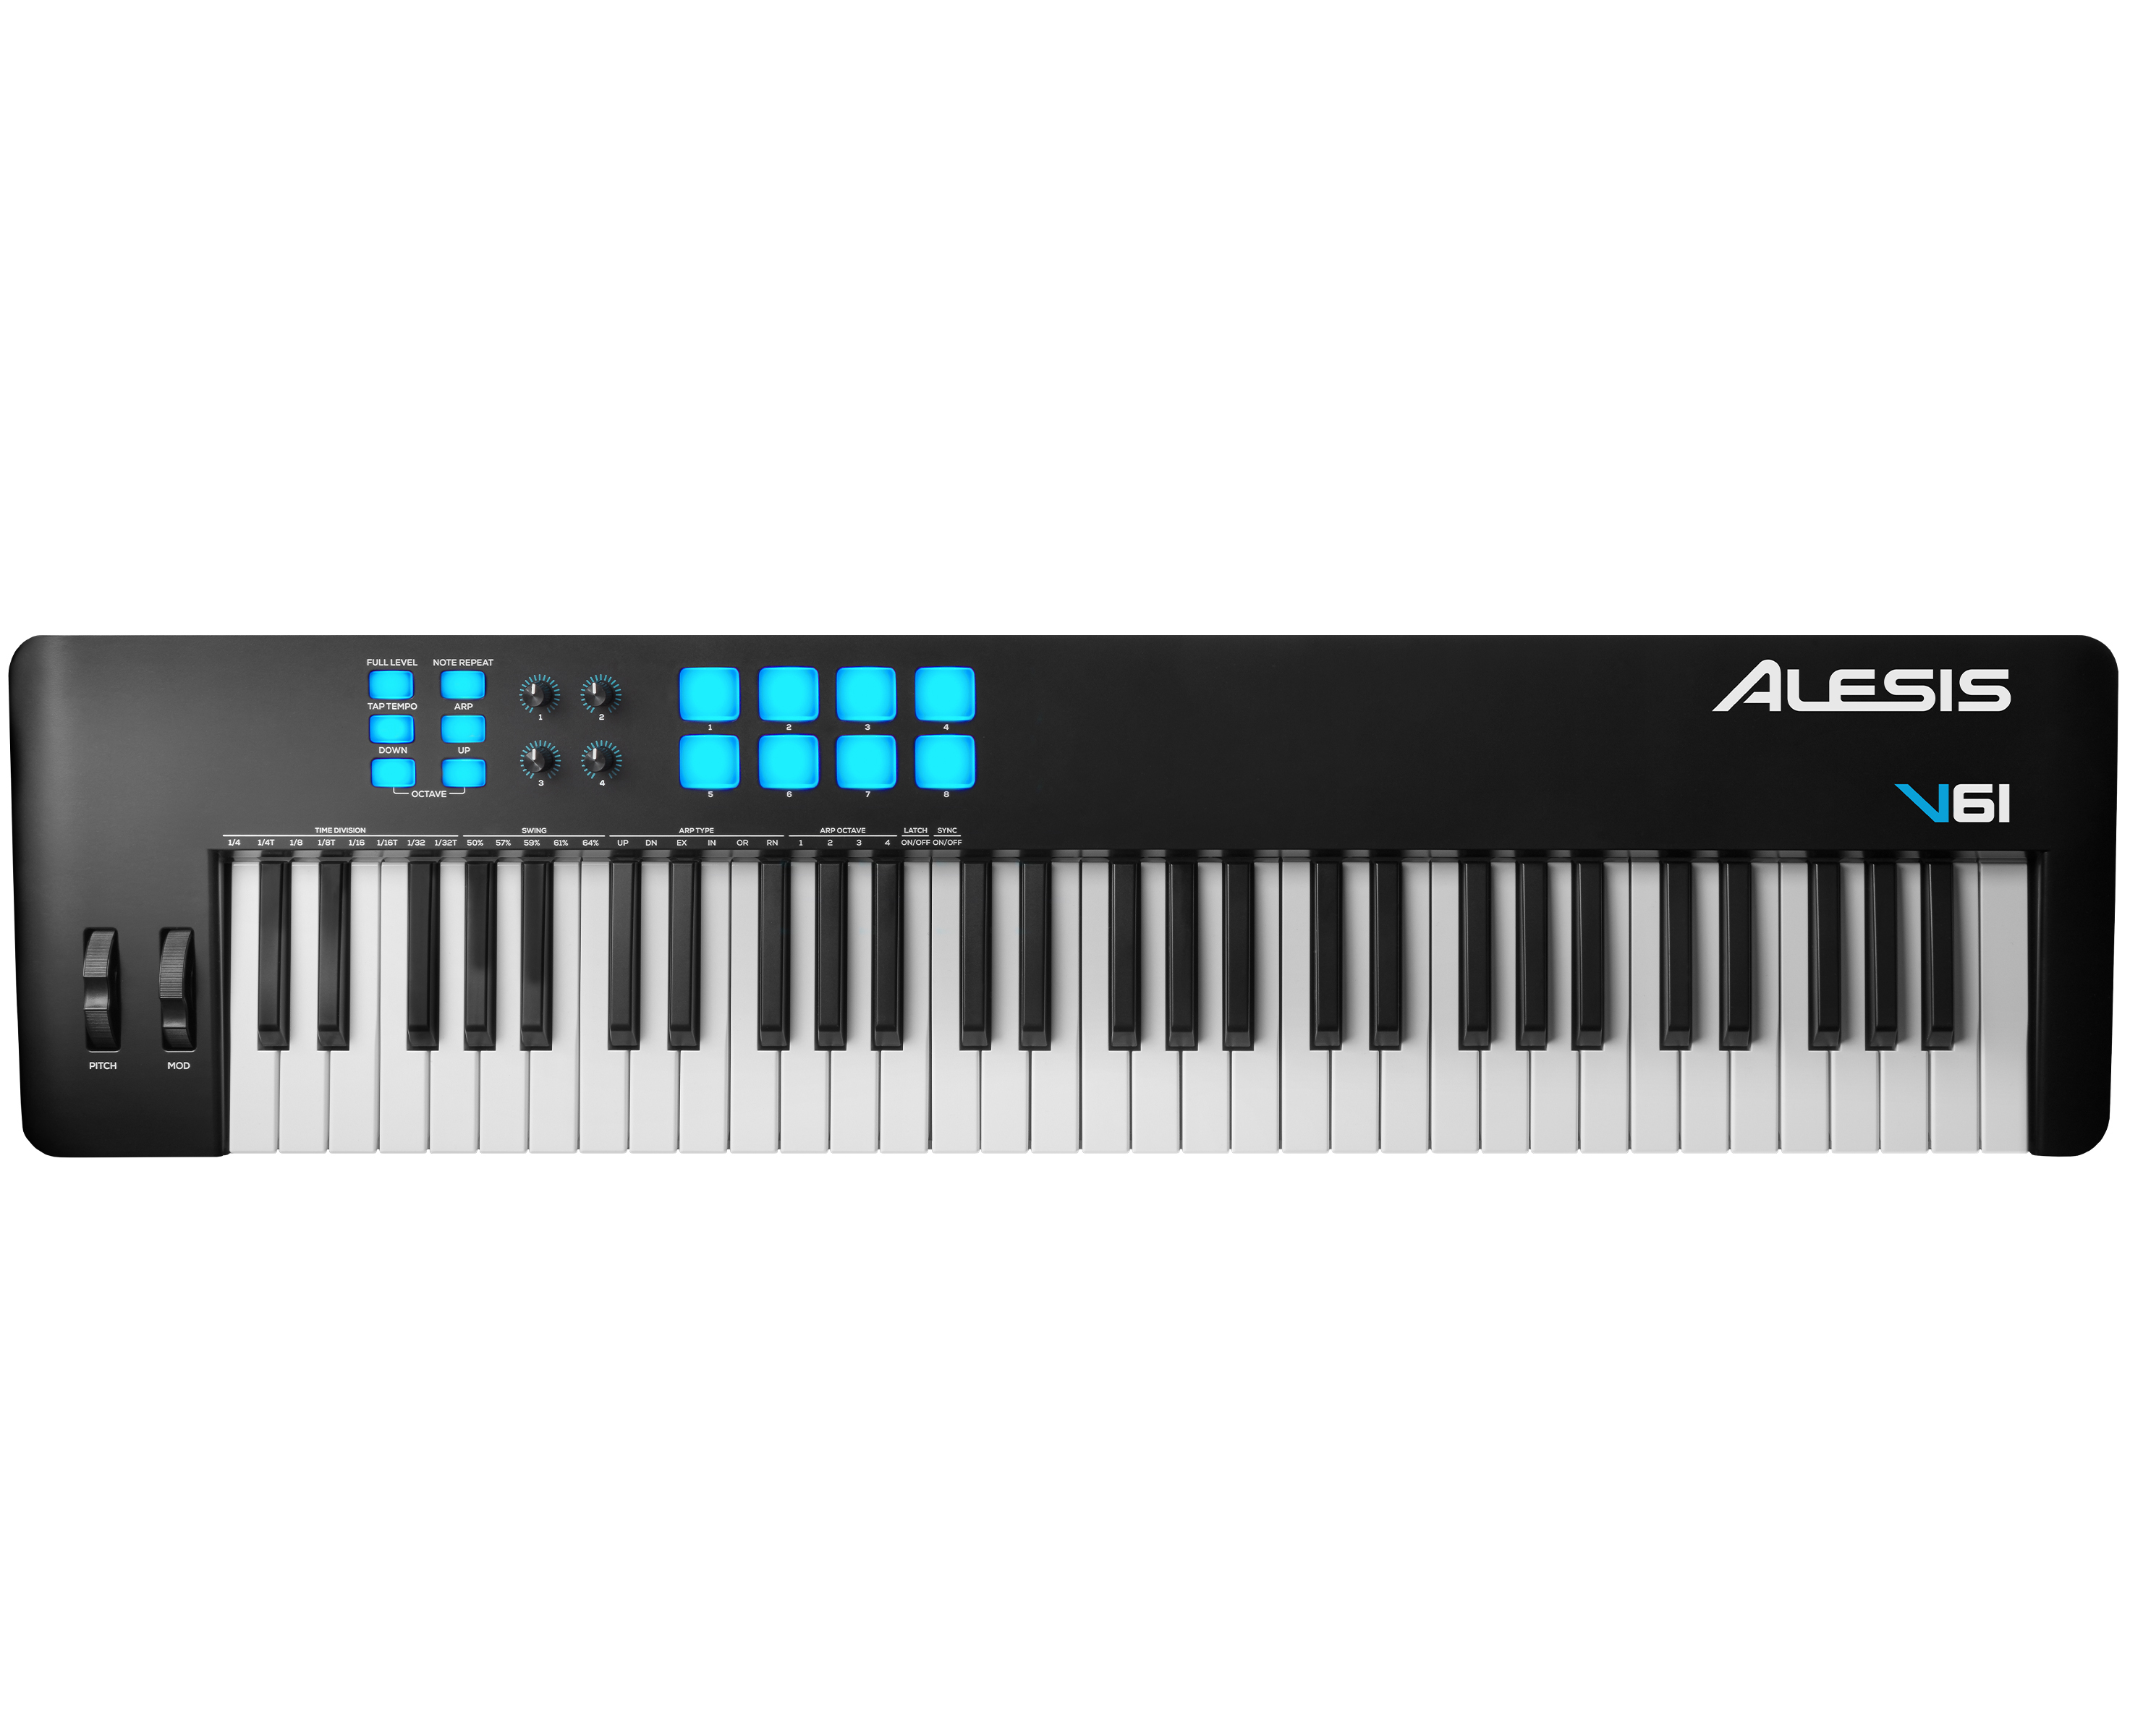 Køb Alesis v61 MKII MIDI keyboard